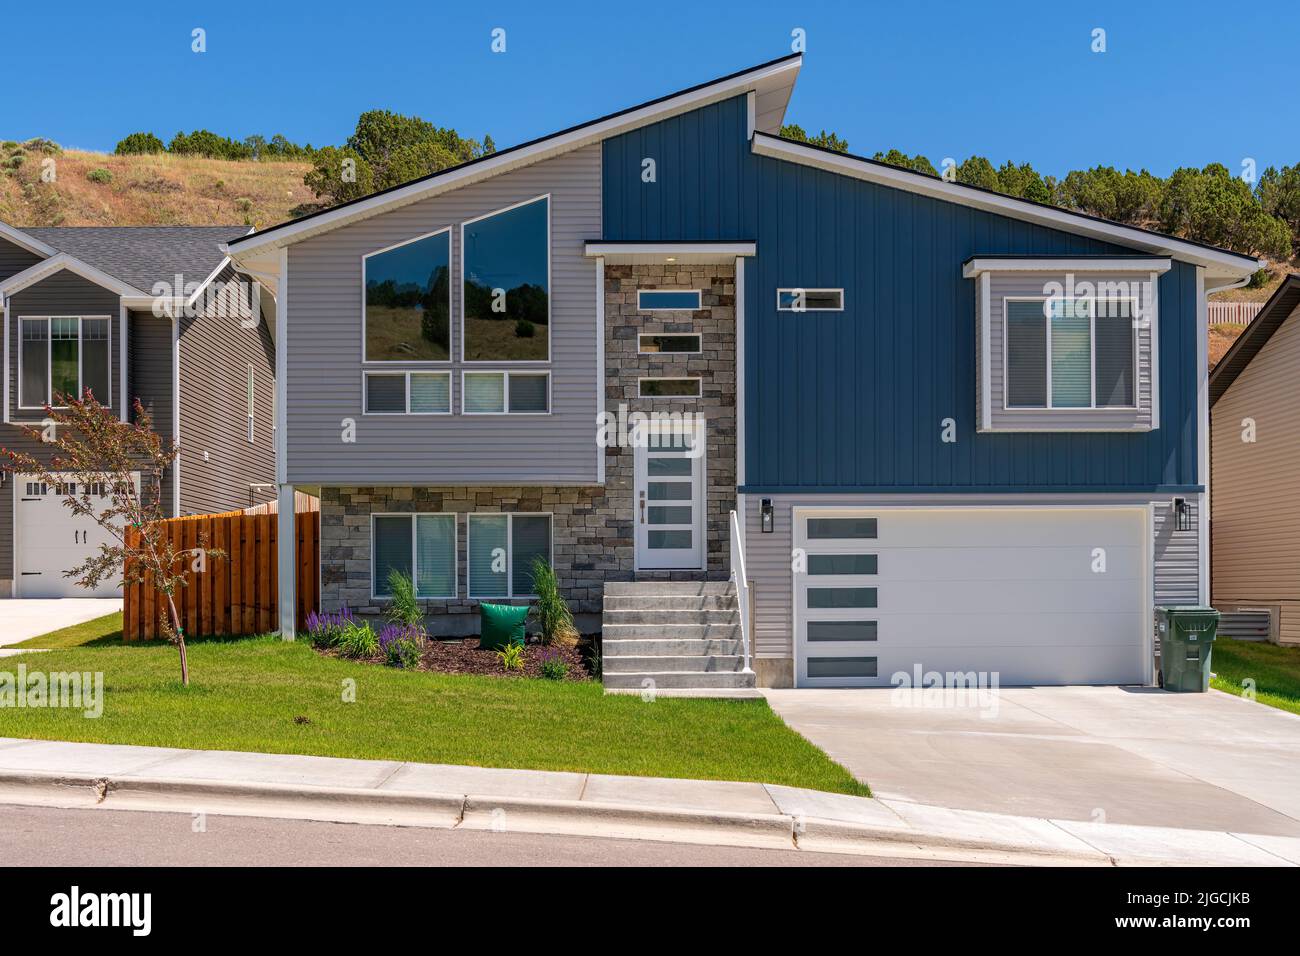 Residential house and neighborhood in a suburb Pocatello Idaho. Stock Photo